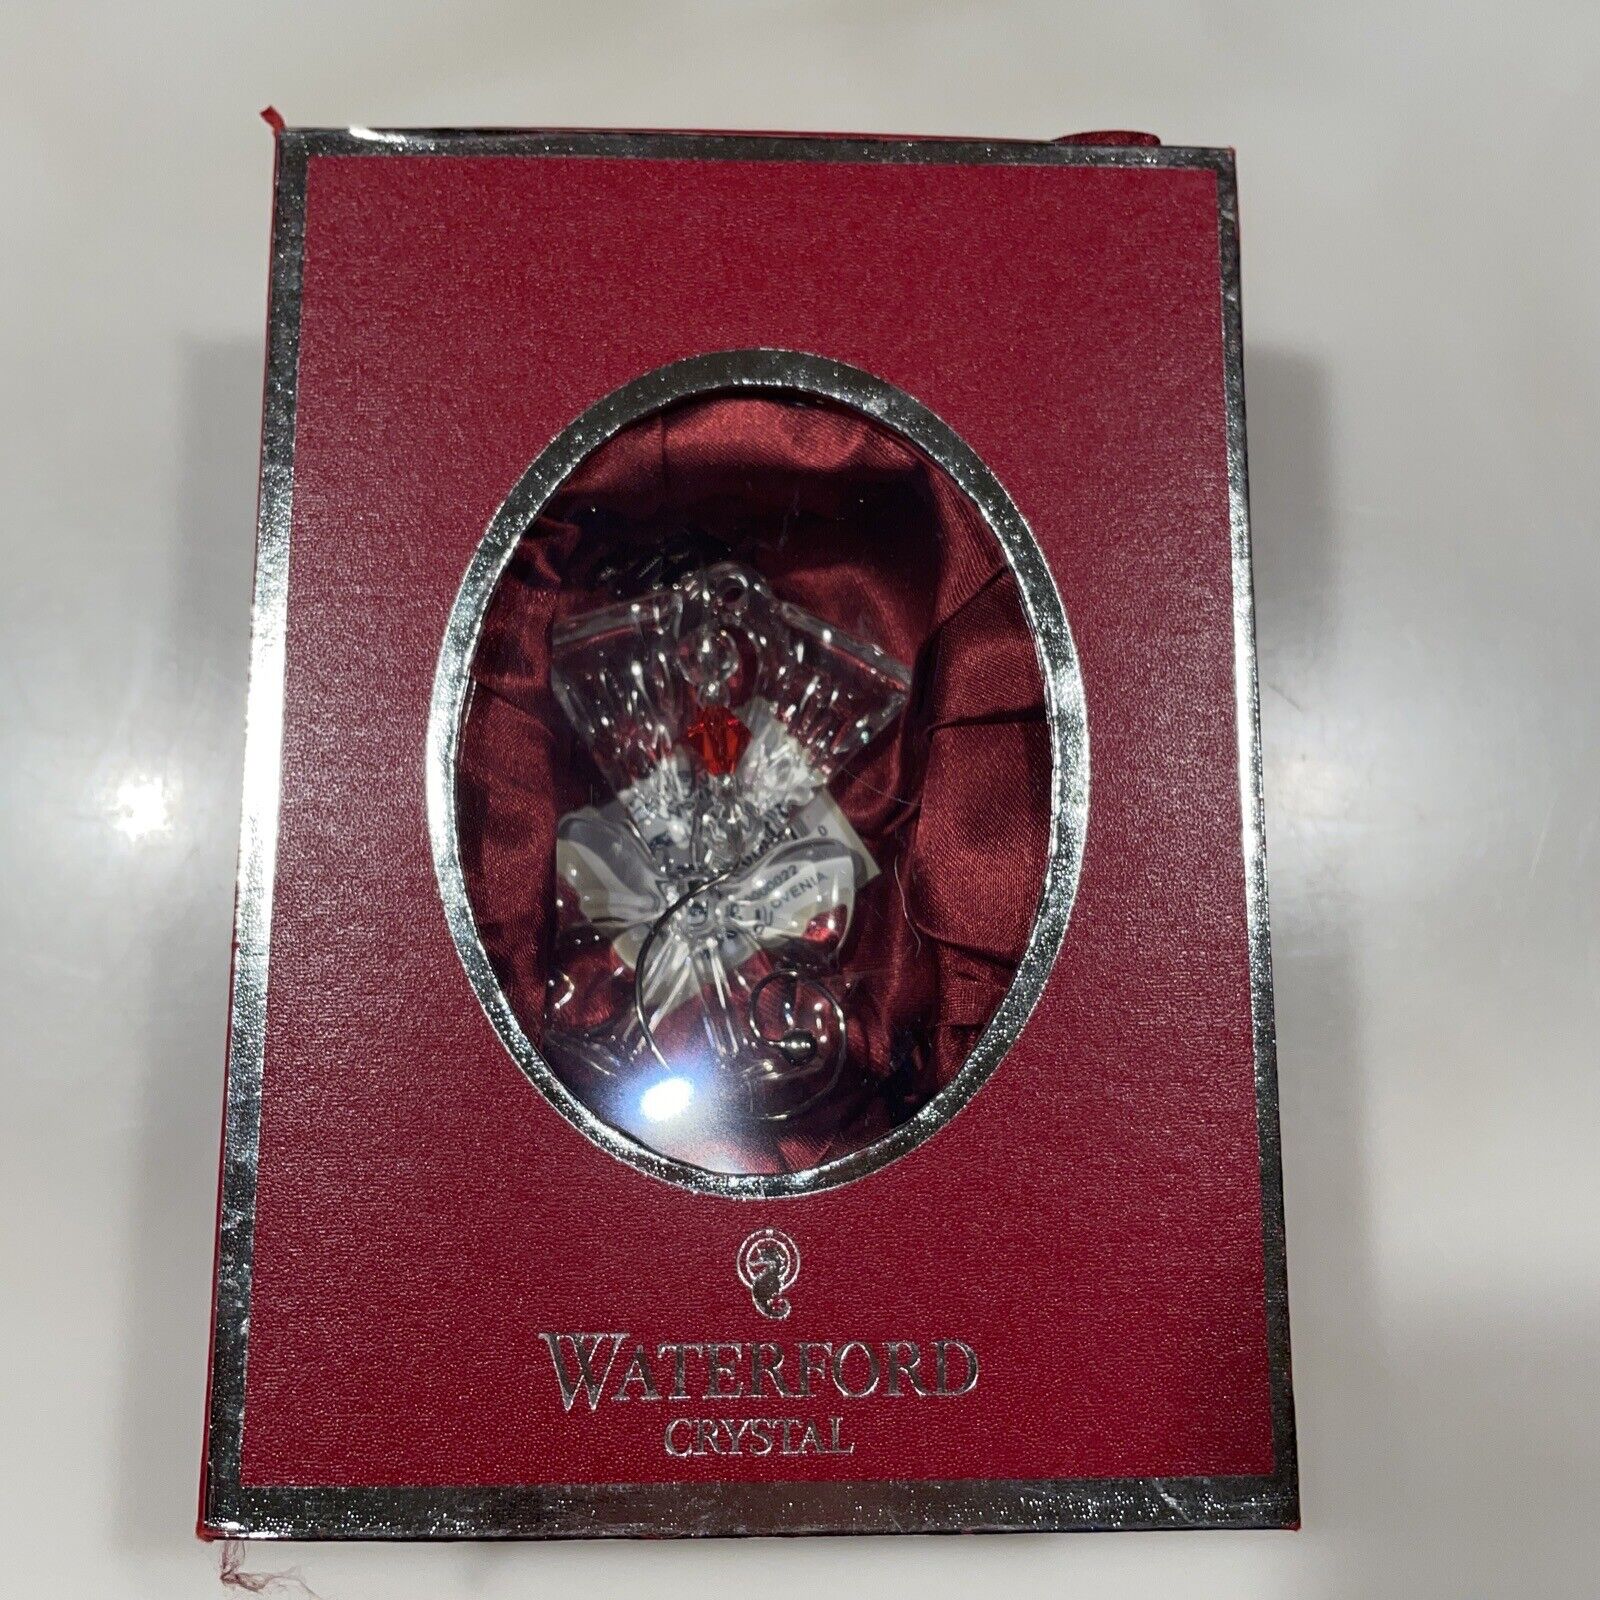 2013 Waterford Crystal Lismore Toasting Flute Ornament w/Enhancer/Original Box